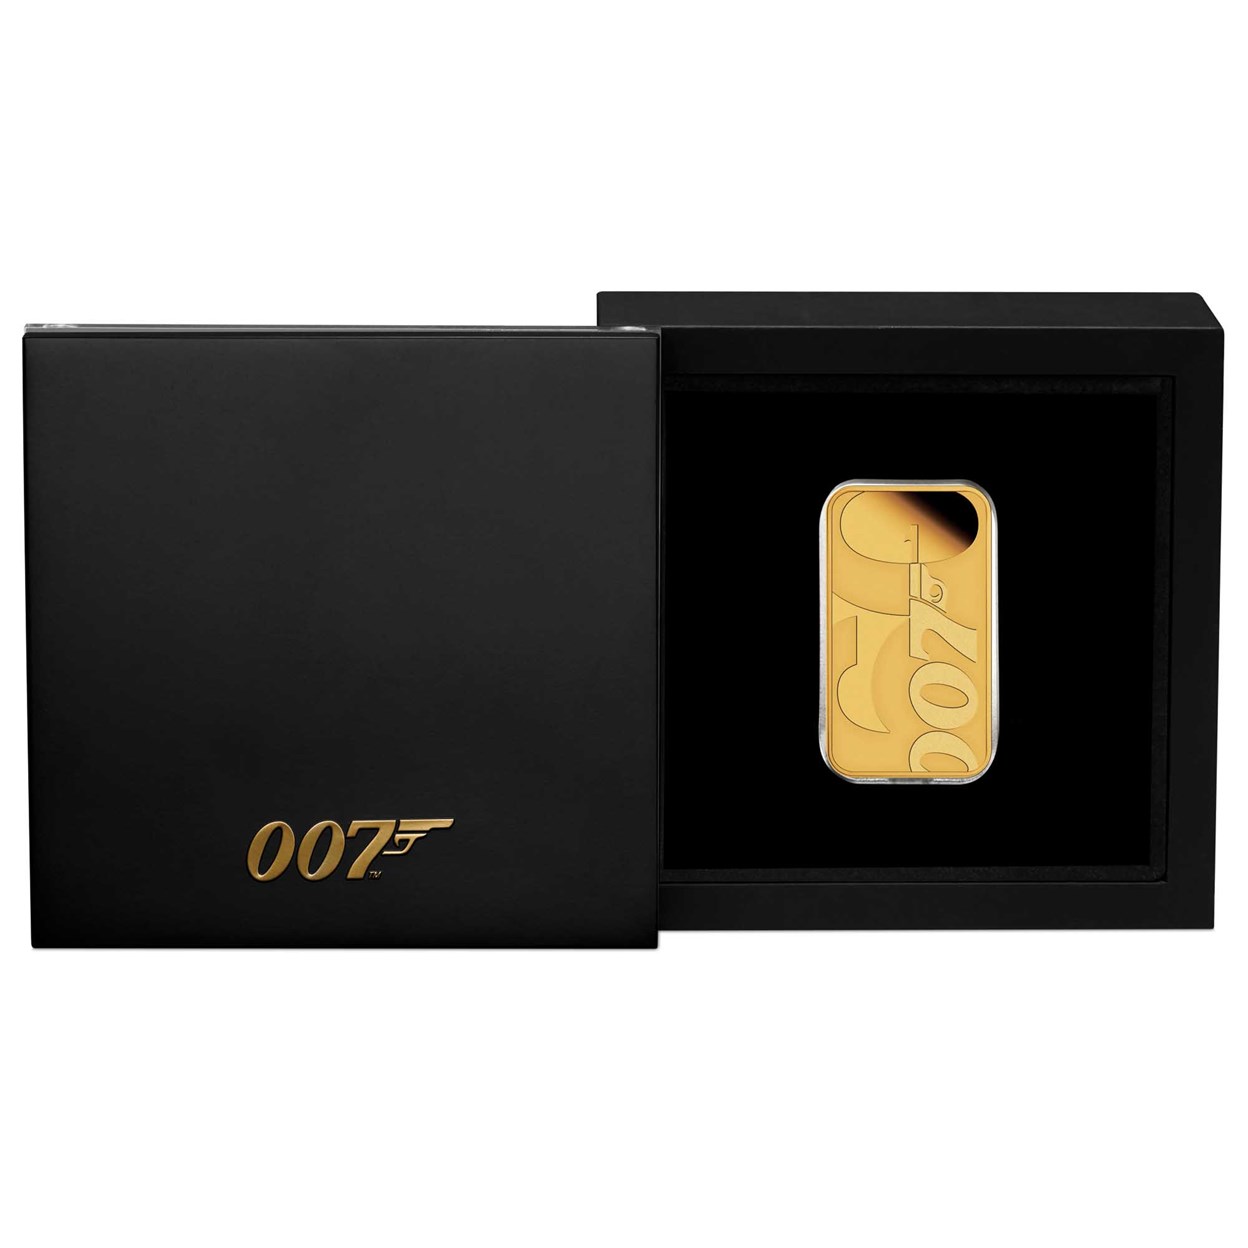 04 2022 James Bond 60th Anniversary 1oz Gold Proof Rectangular Coin inCase HighRes